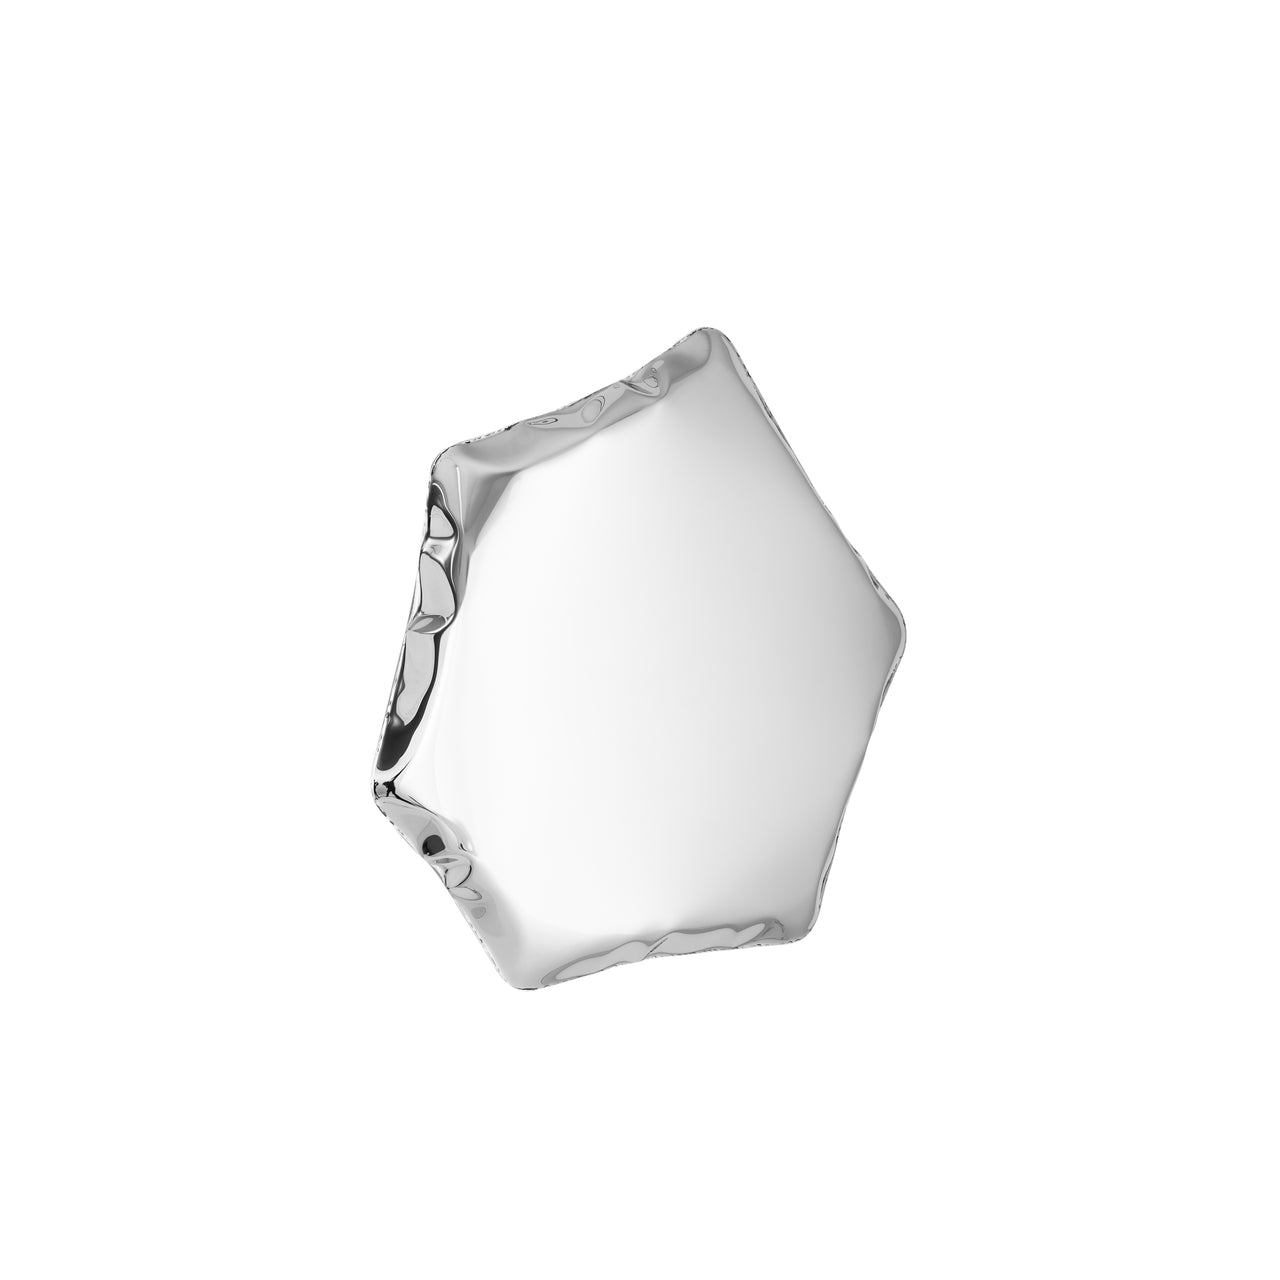 Tafla Polygonal Mirror Collection: Mirror C6